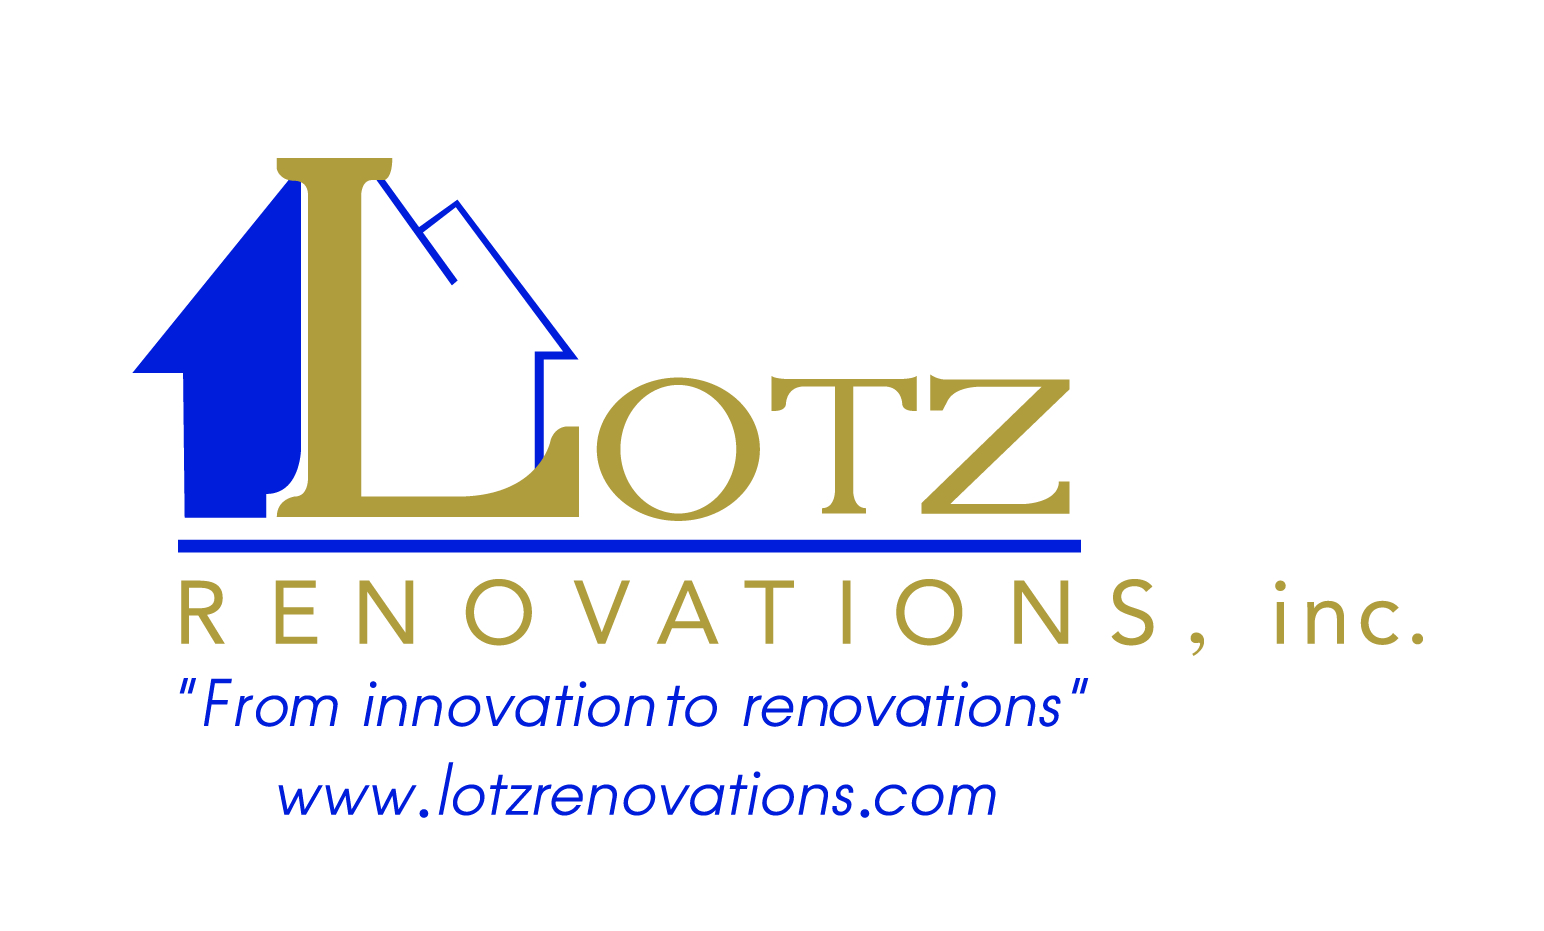 Lotz Renovations, Inc. logo